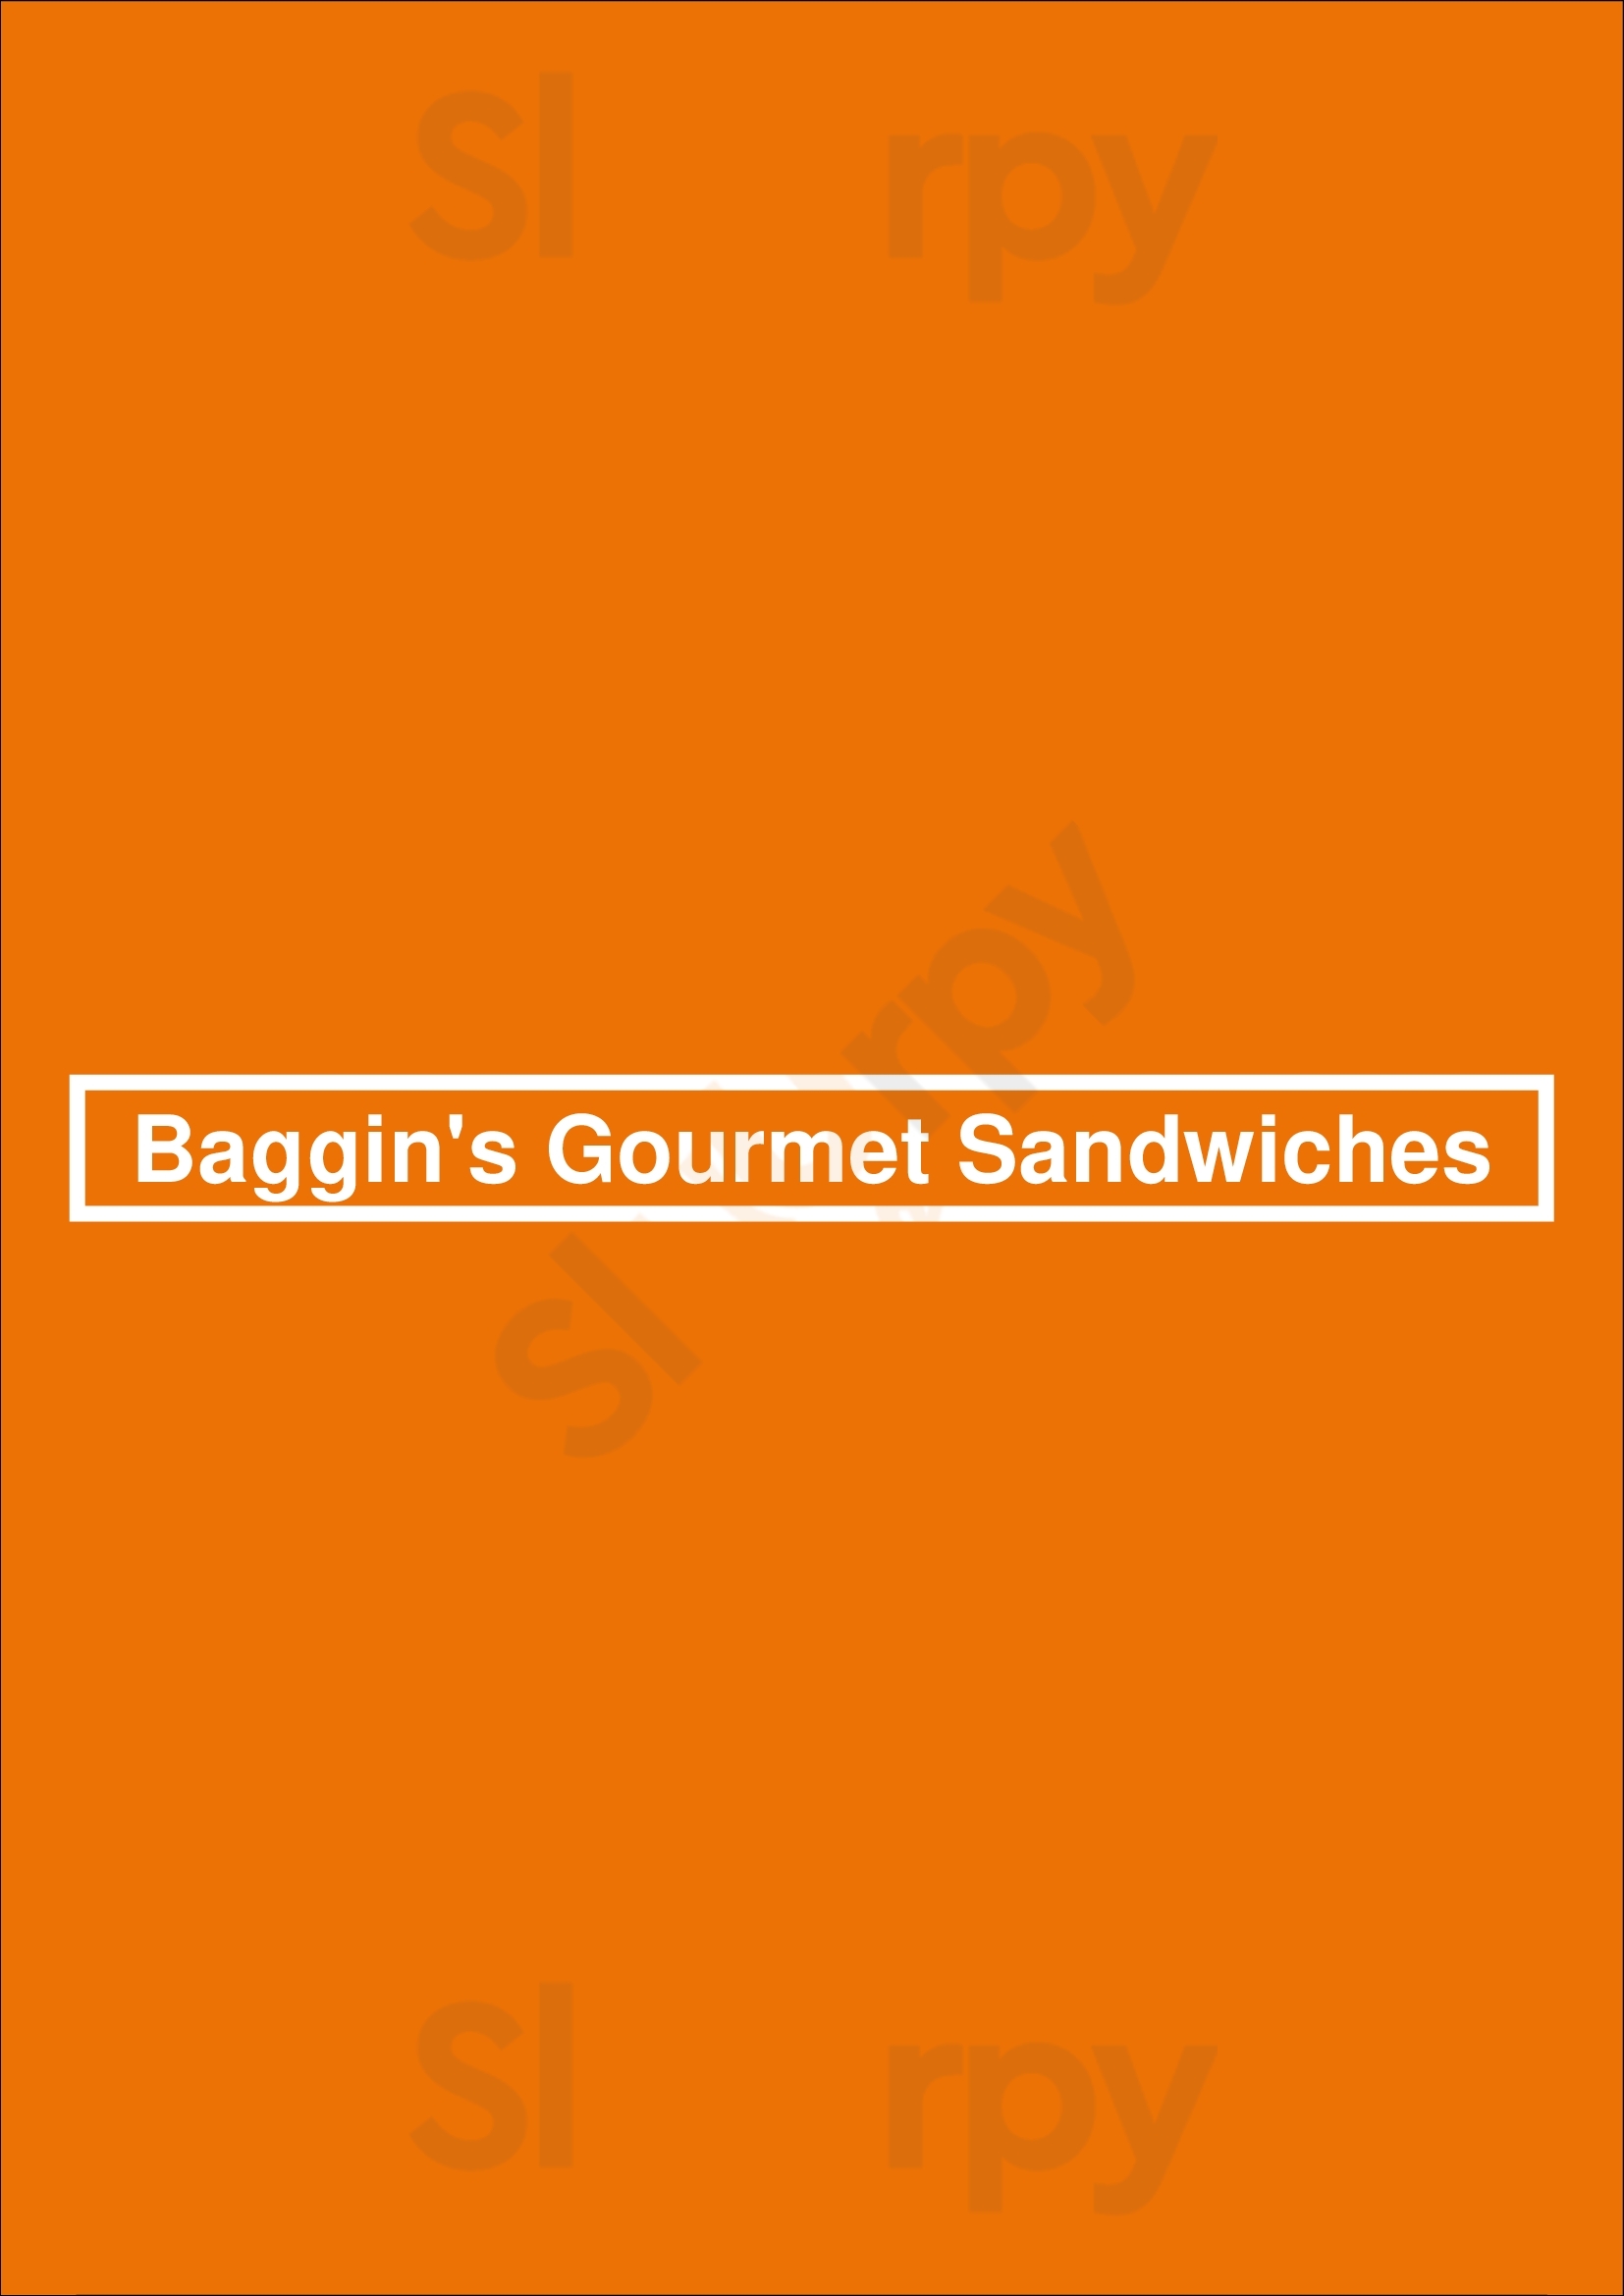 Baggin's Gourmet Sandwiches Tucson Menu - 1